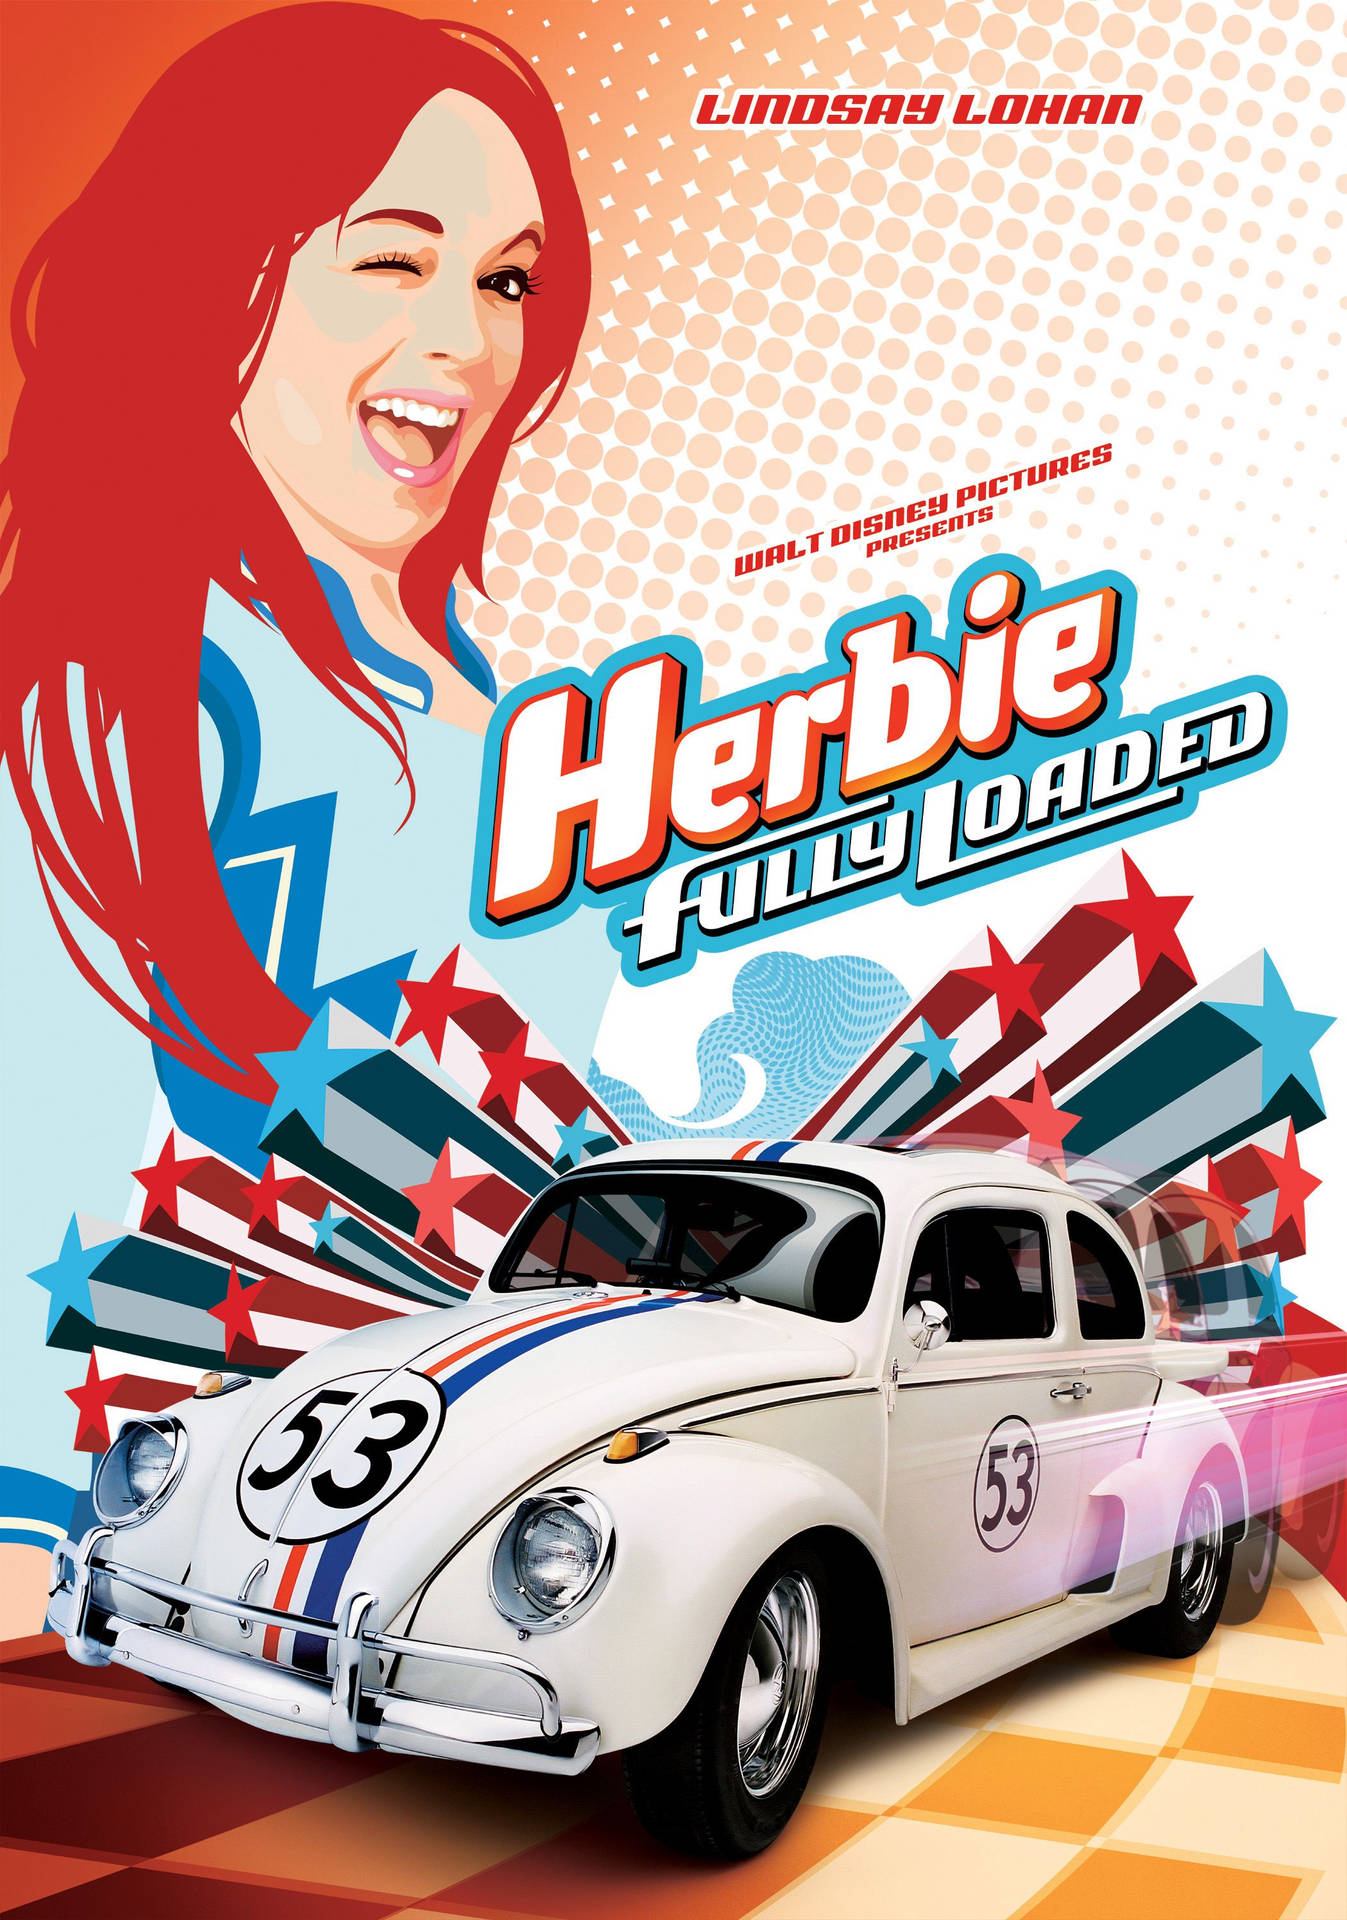 Lindsay Lohan with Herbie in Herbie Fully Loaded Movie Poster Wallpaper